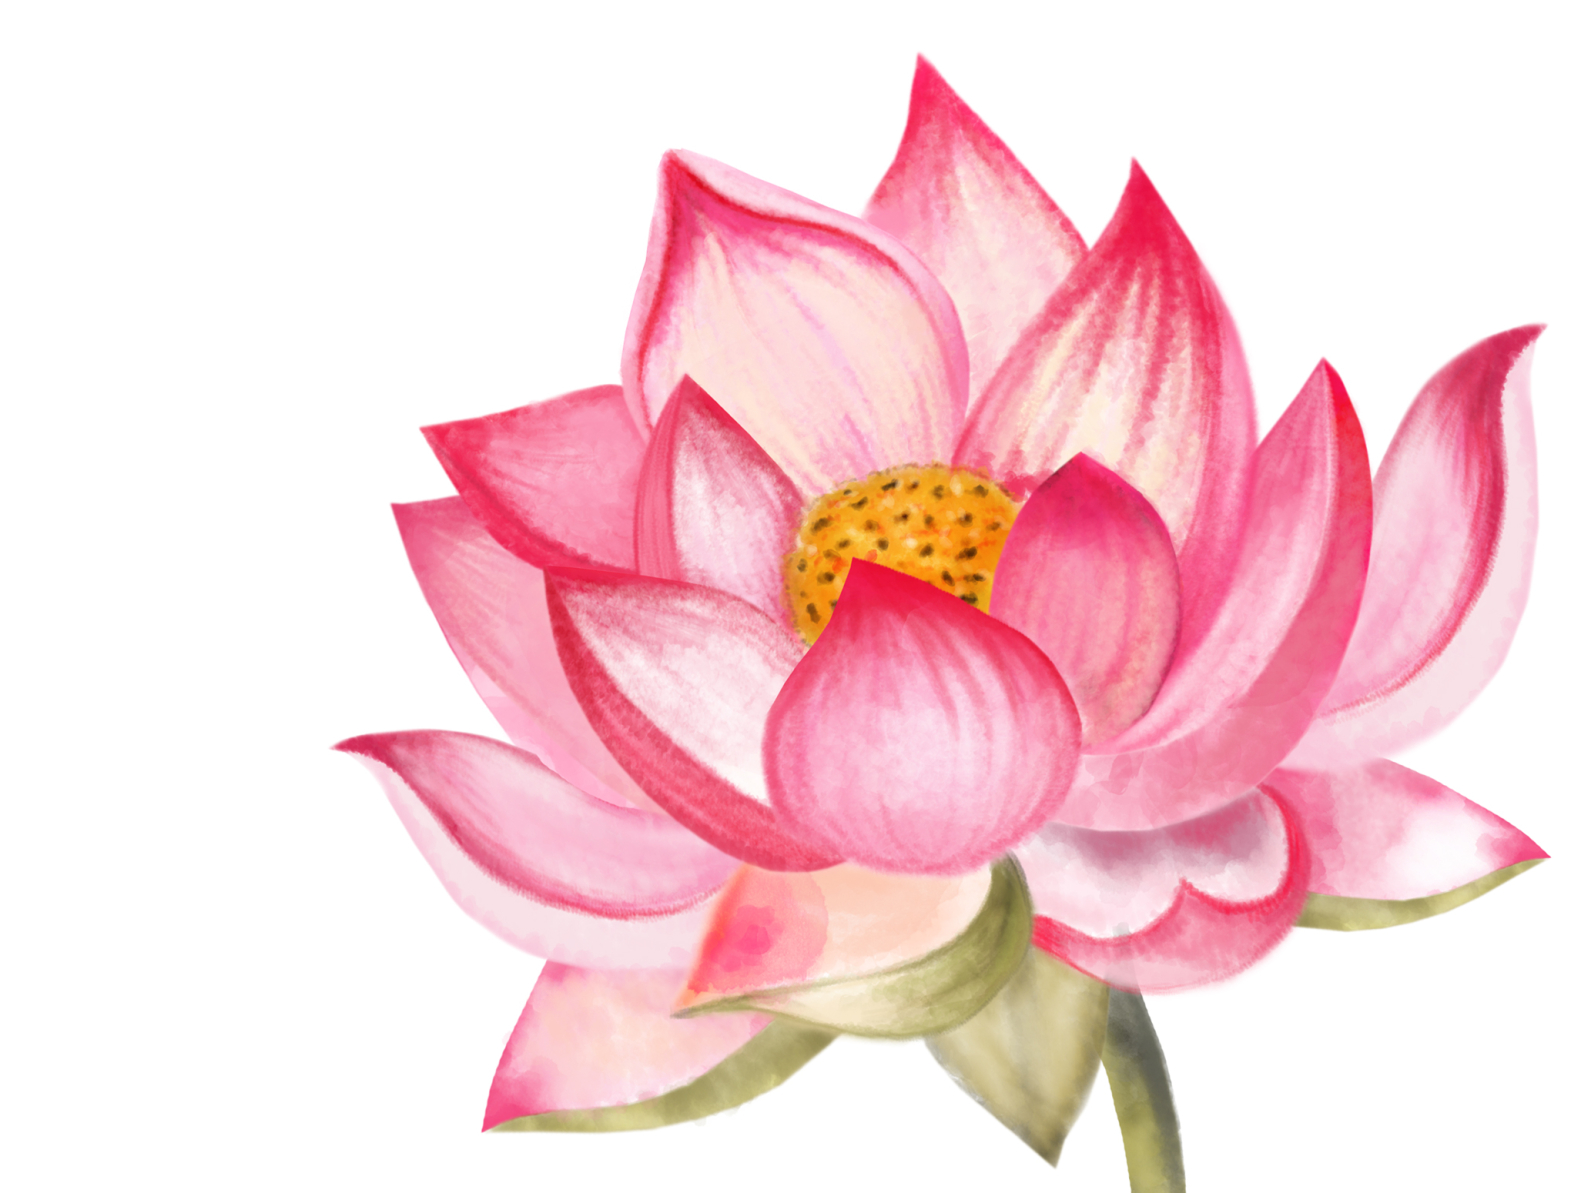 Lotus national flower drawing #ashortaday #shorts - YouTube